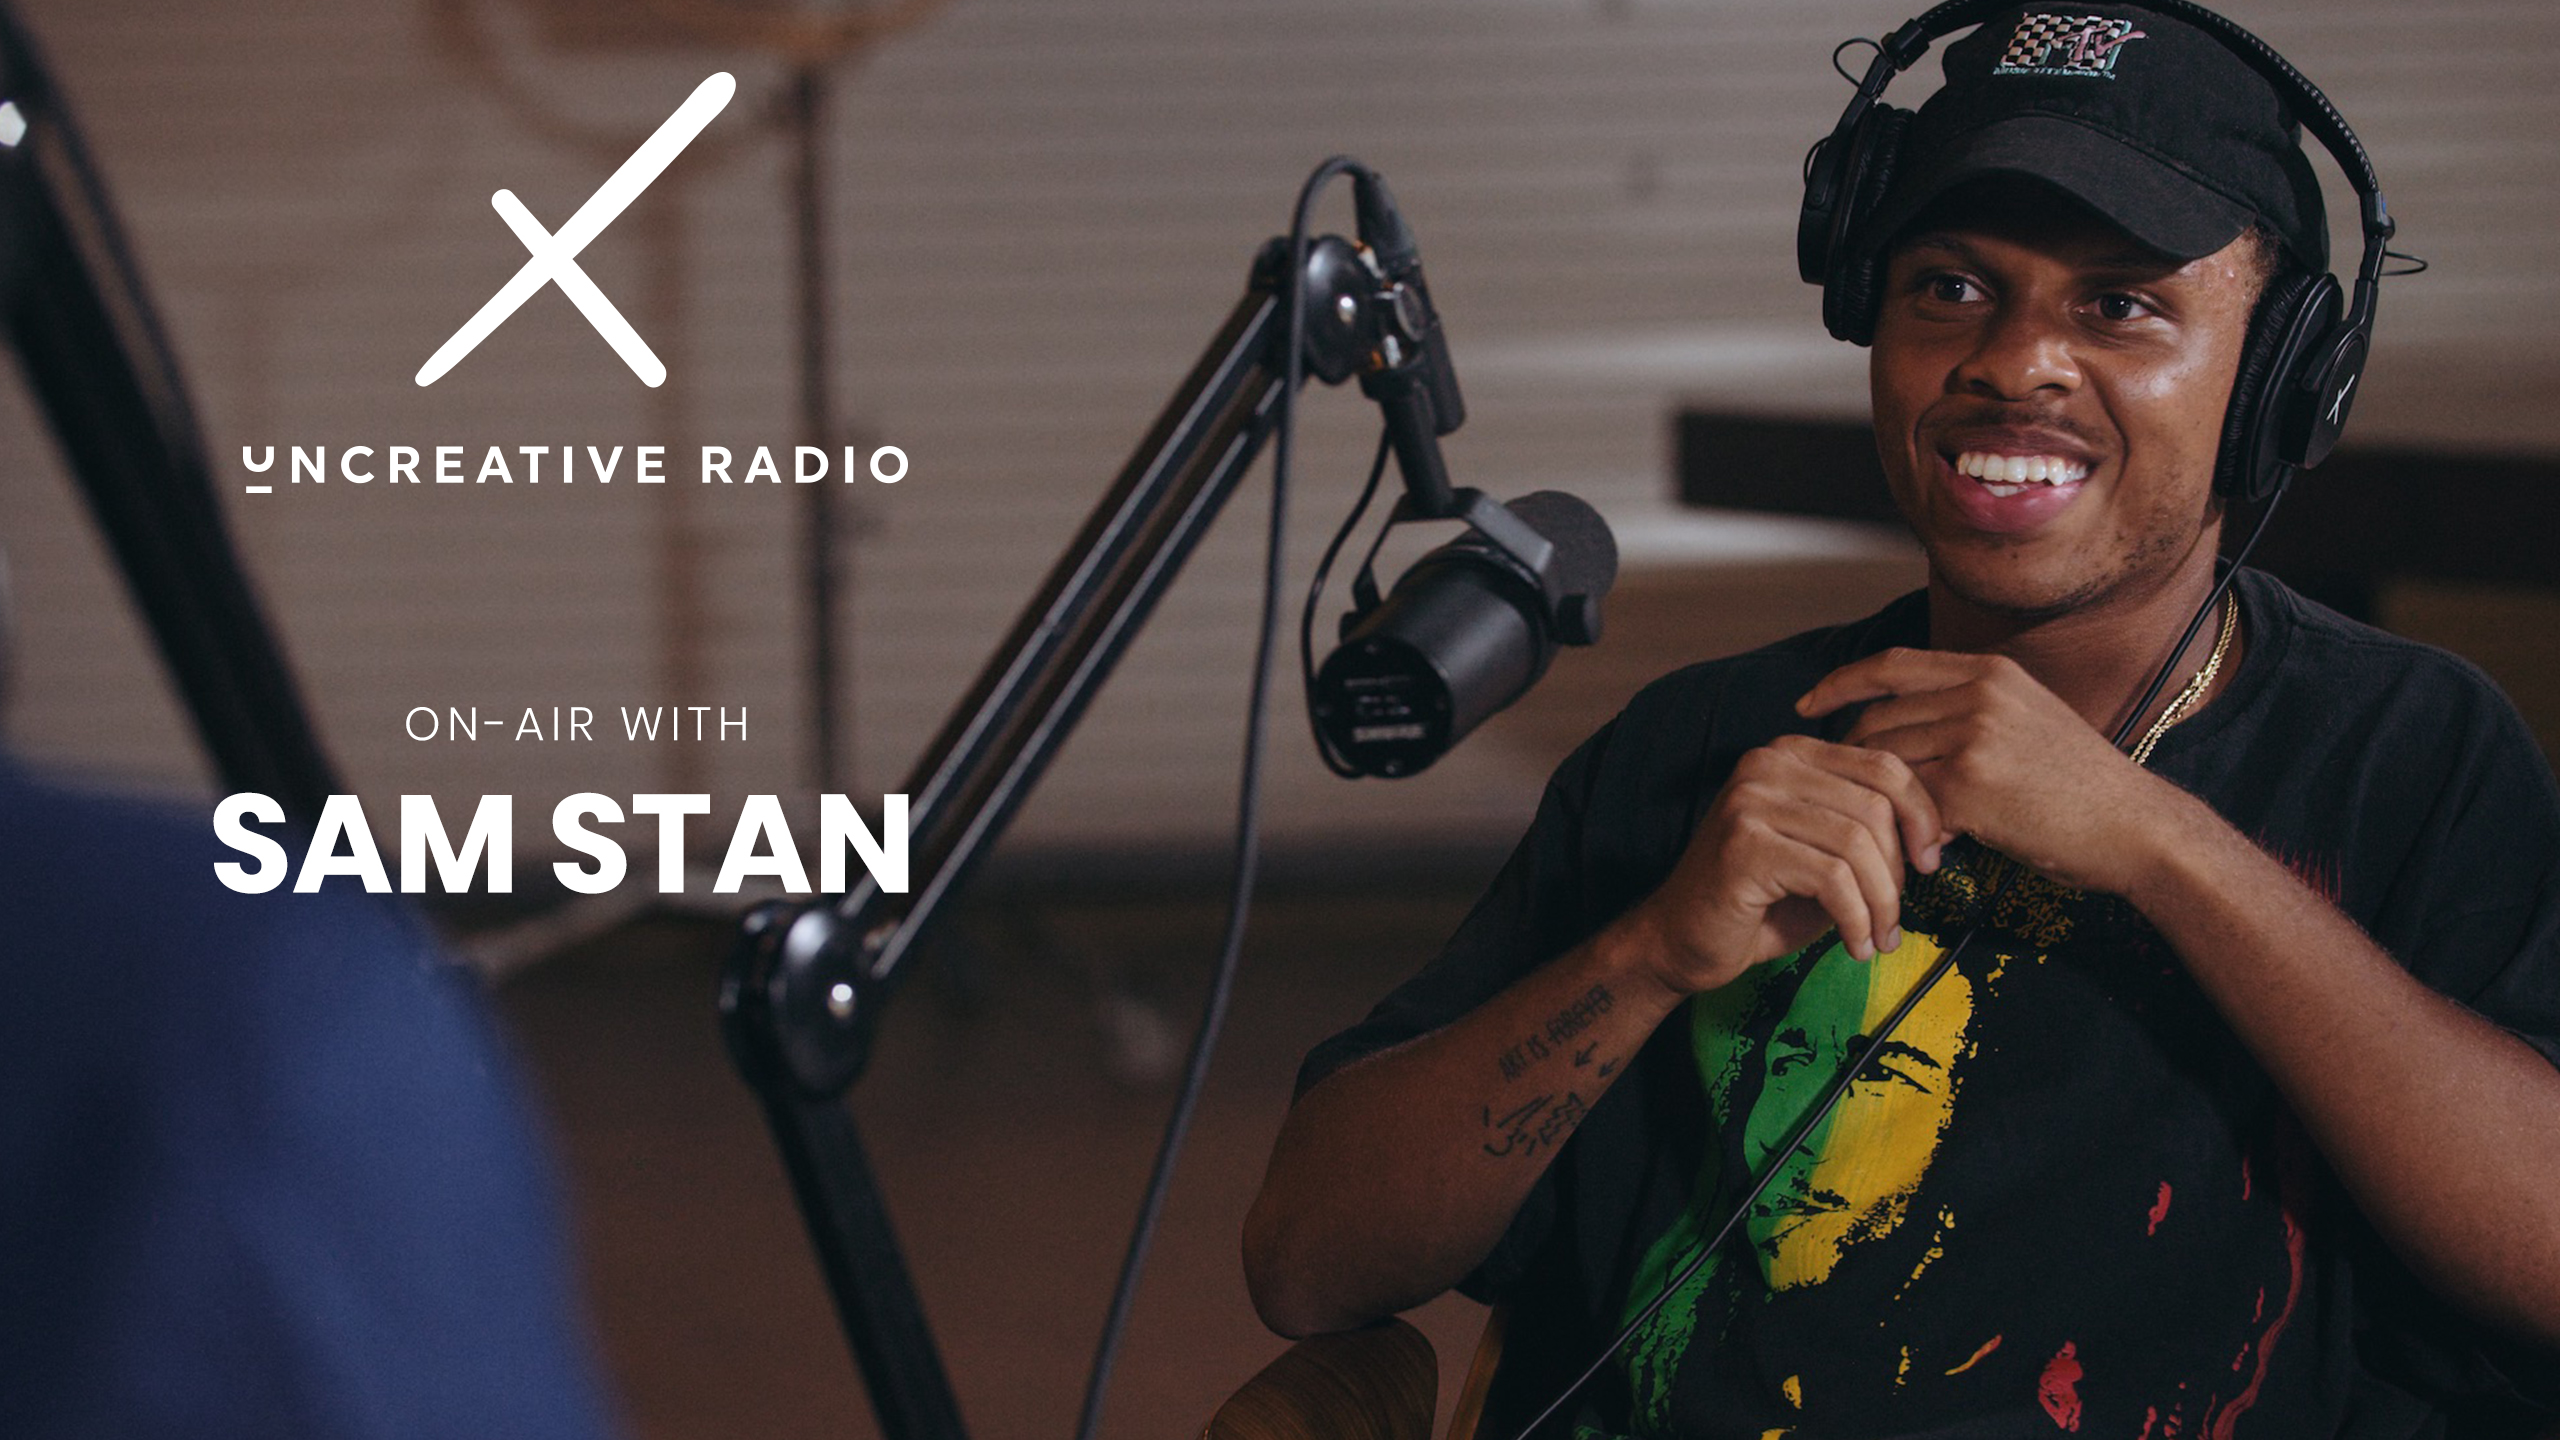 Uncreative Radio with Sam Stan Headshot of African American man wearing black headphones and black cap talking in microphone